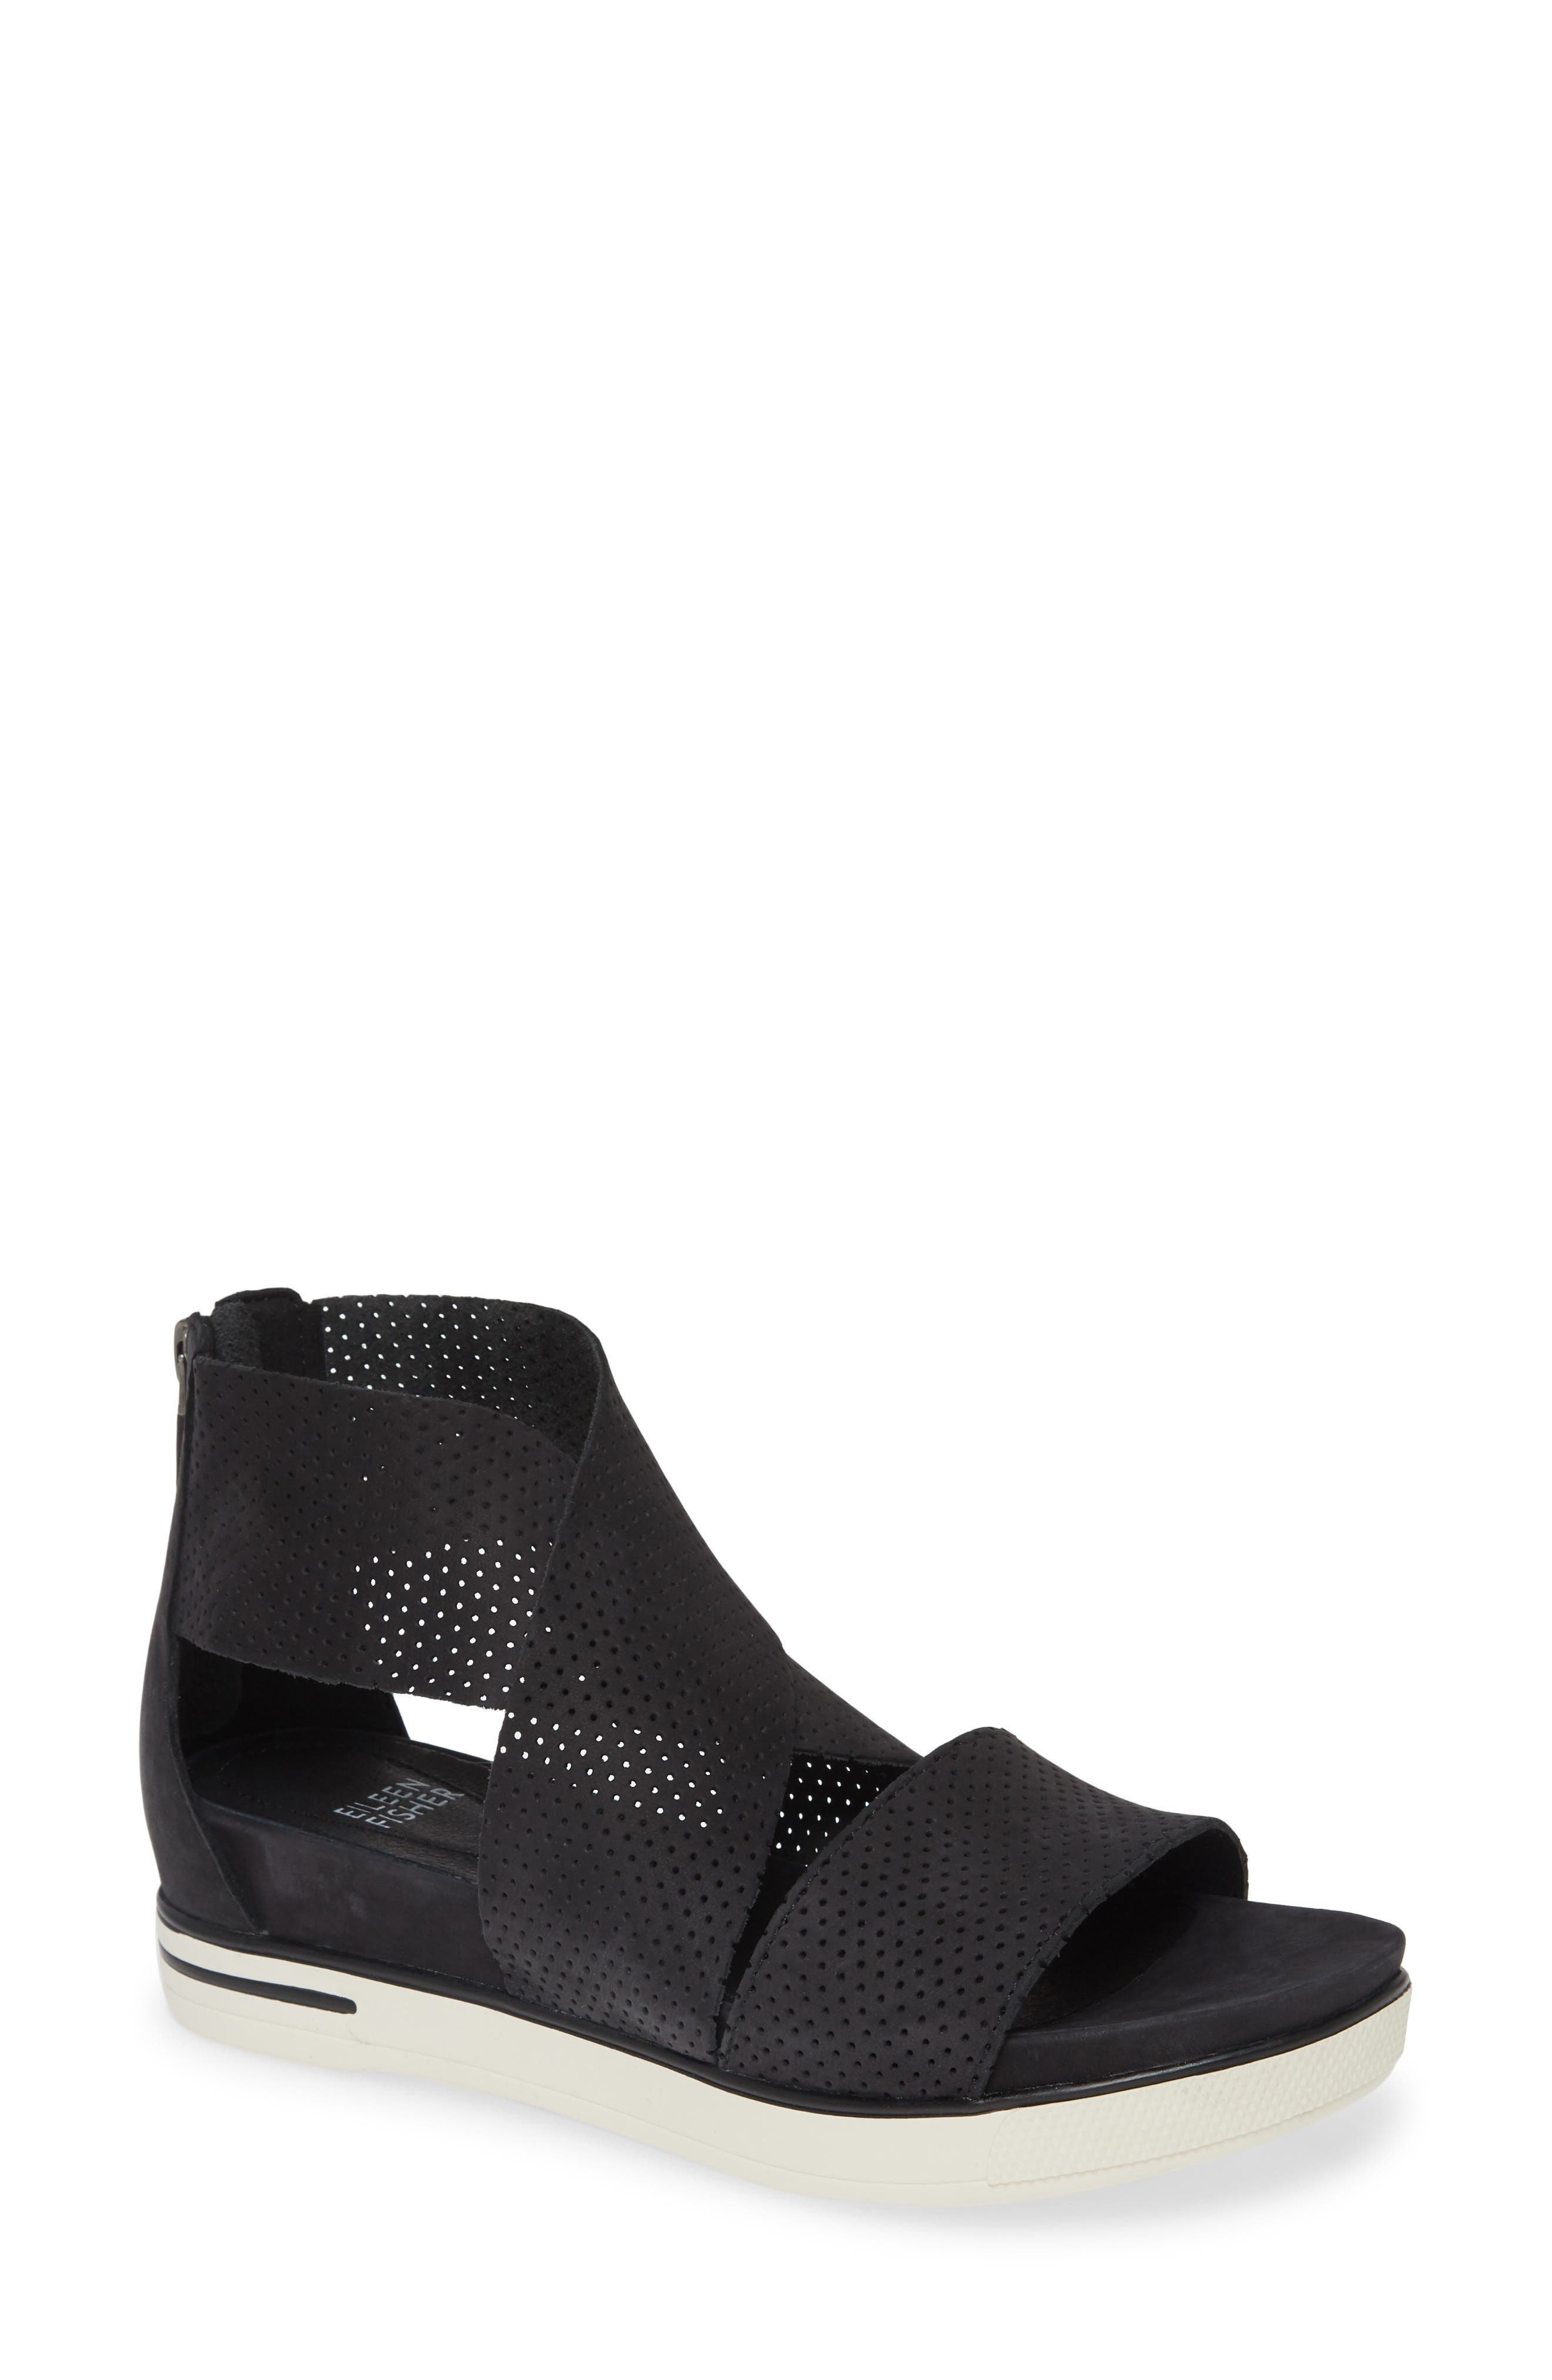 Eileen Fisher Sport Platform Sandal In Black/ White Nubuck Leather